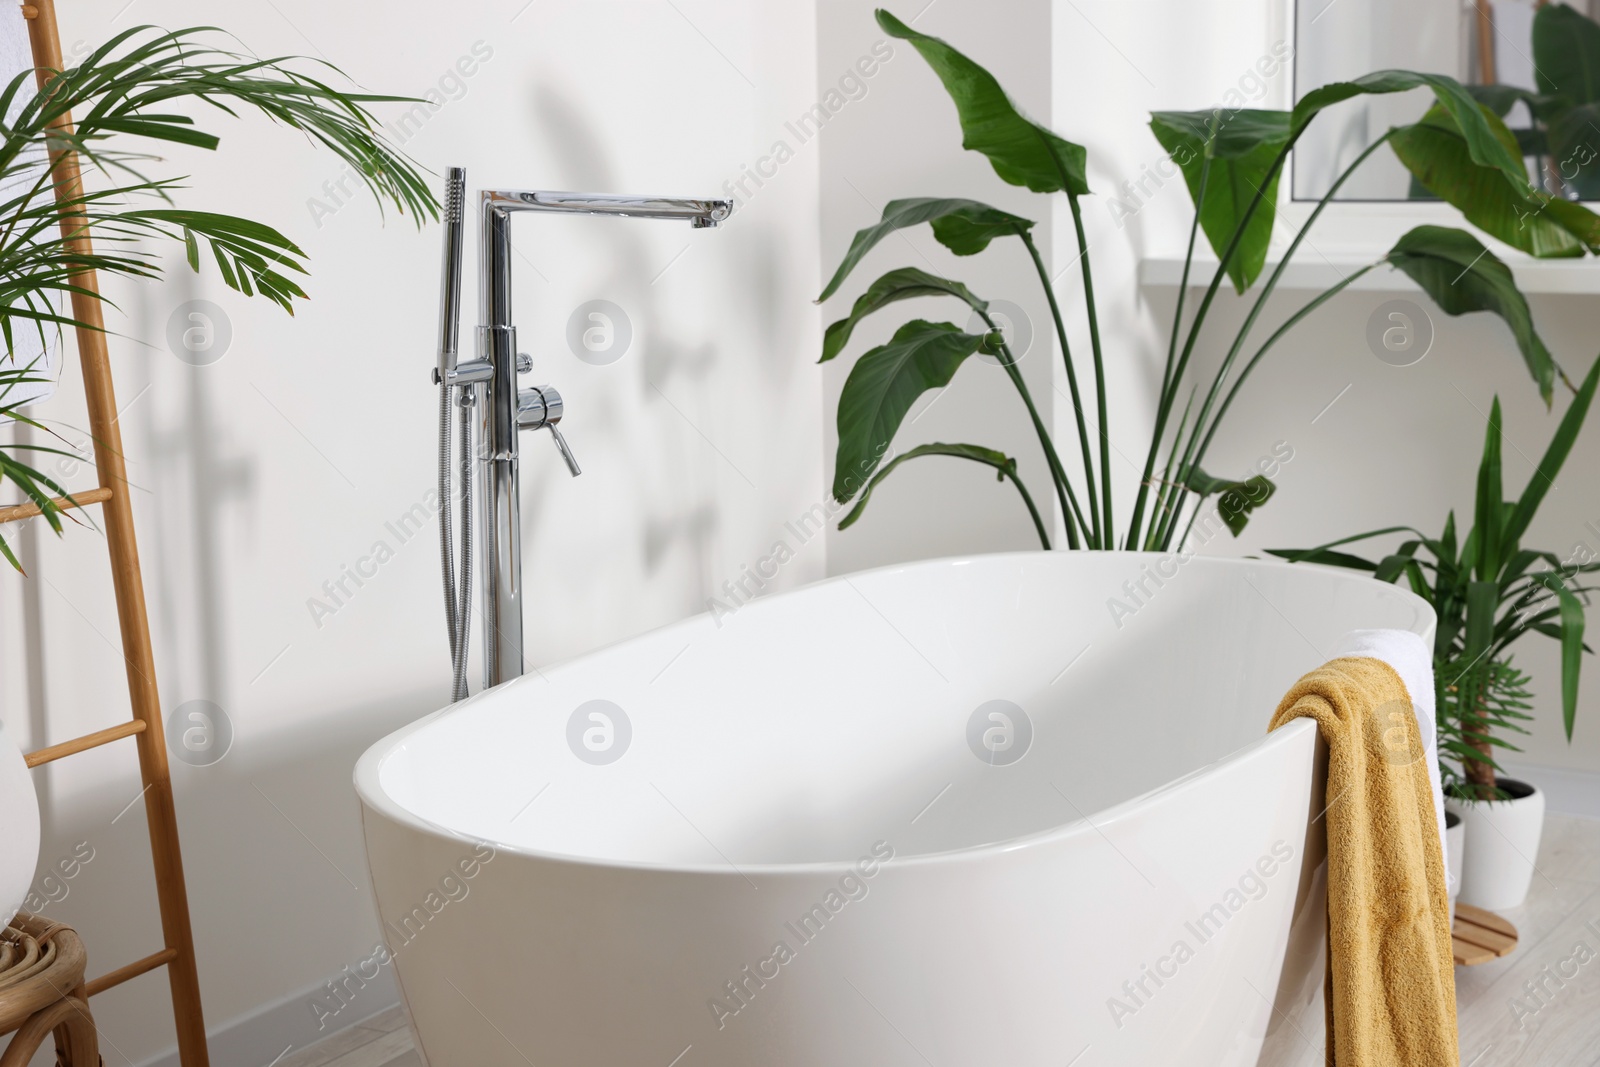 Photo of Stylish ceramic tub and beautiful houseplants in bathroom. Interior design